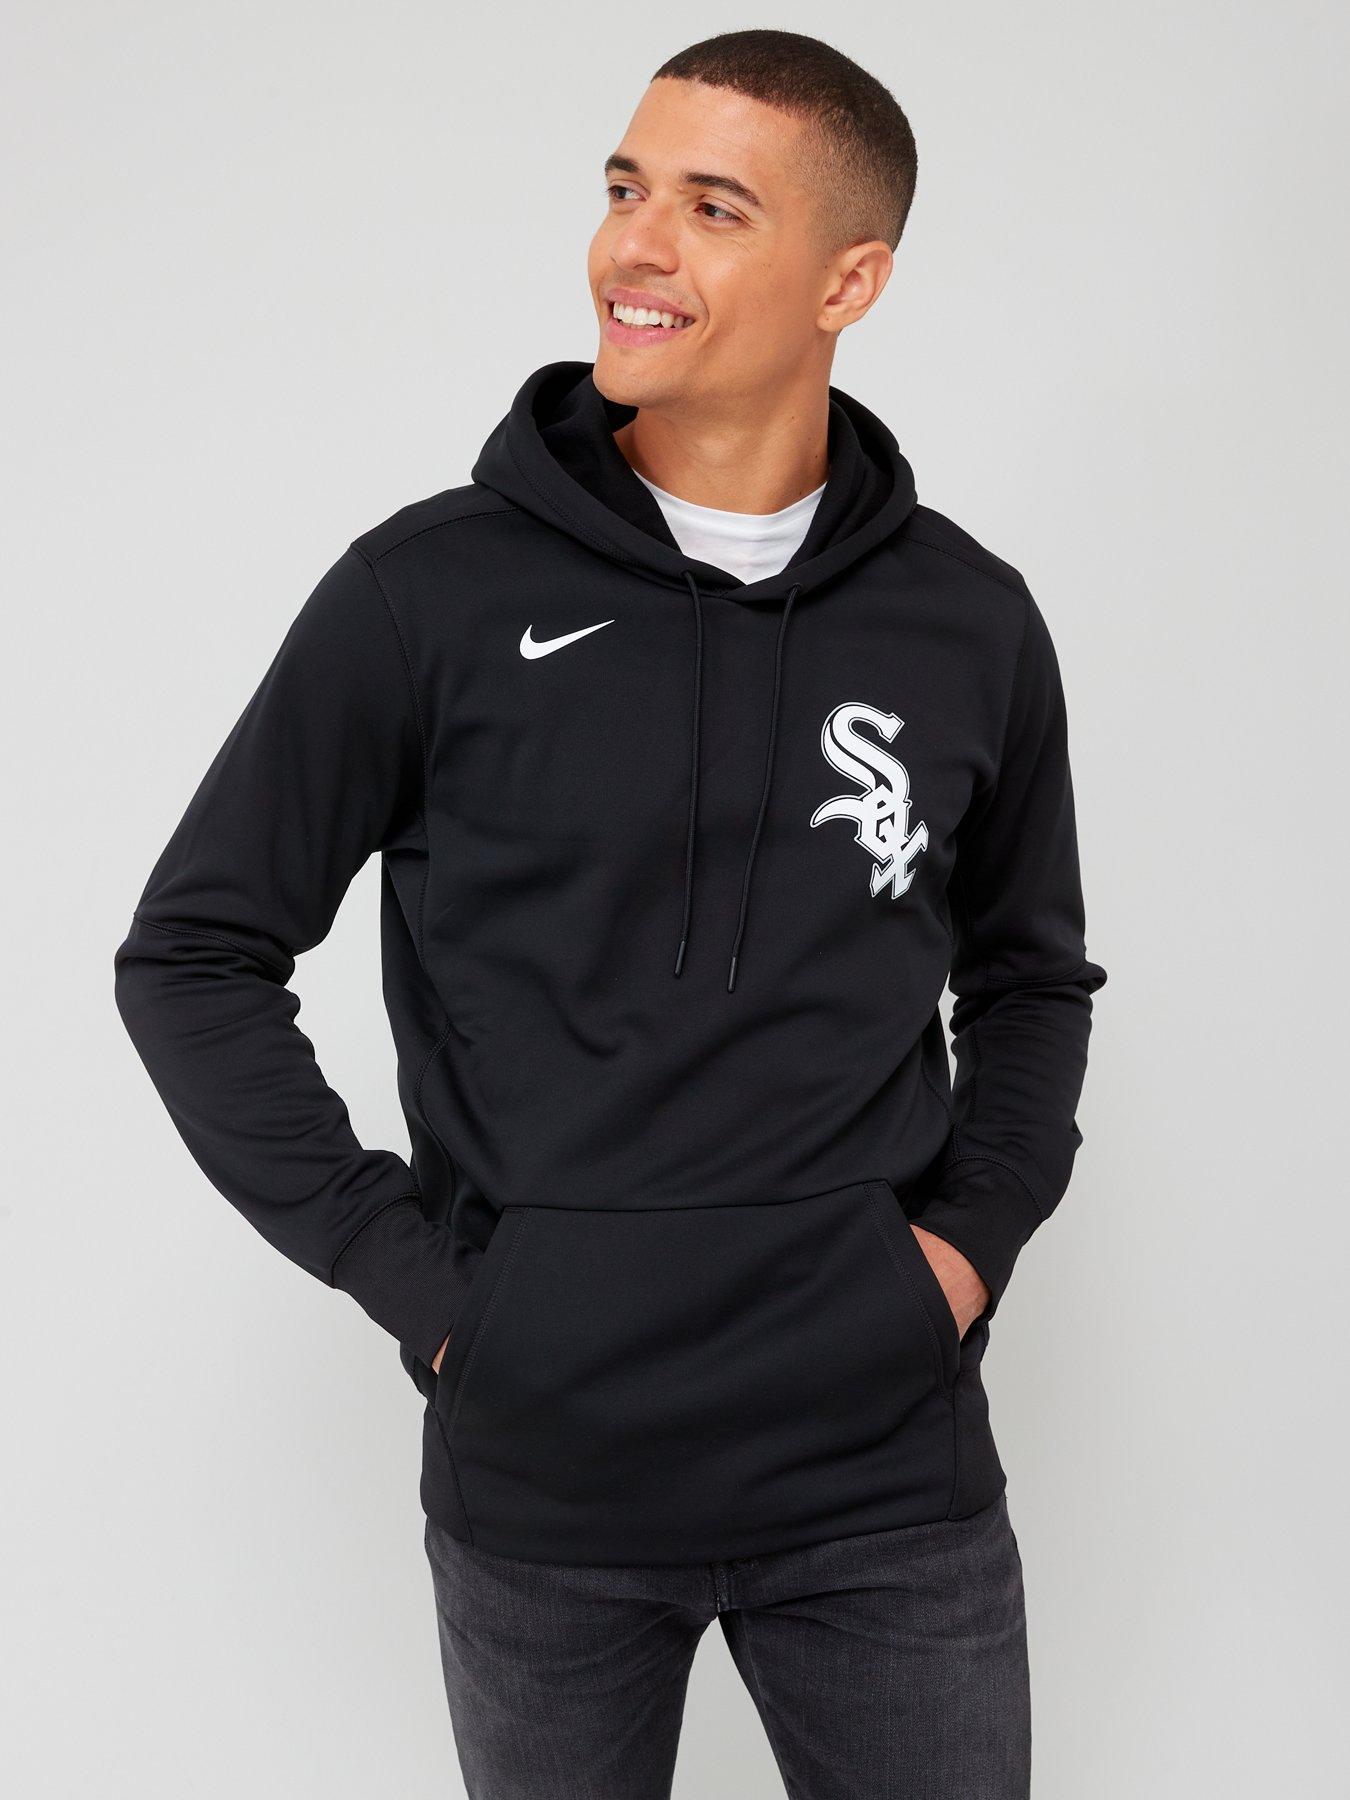 Nike Chicago White Sox Youth Size XL Black Hoodie Sweatshirt